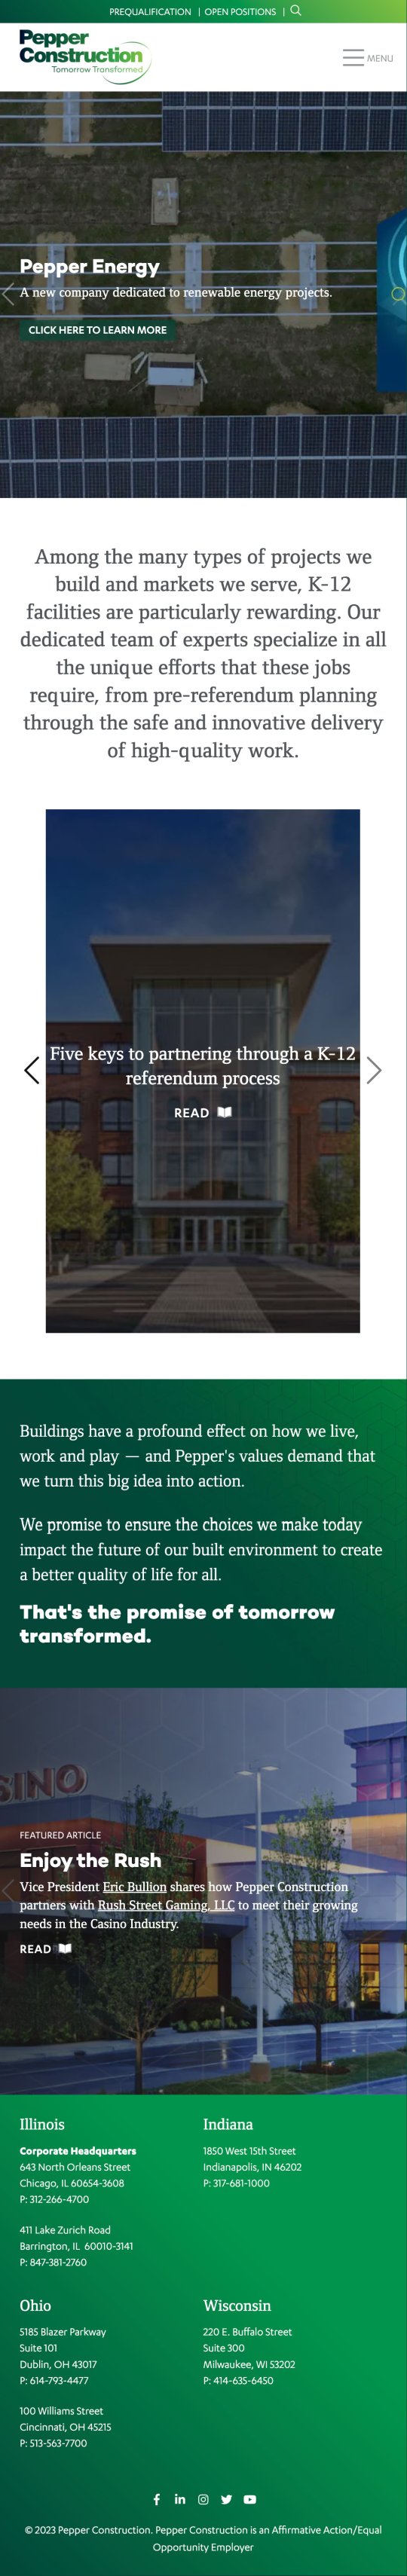 Pepper Construction Website Redesign